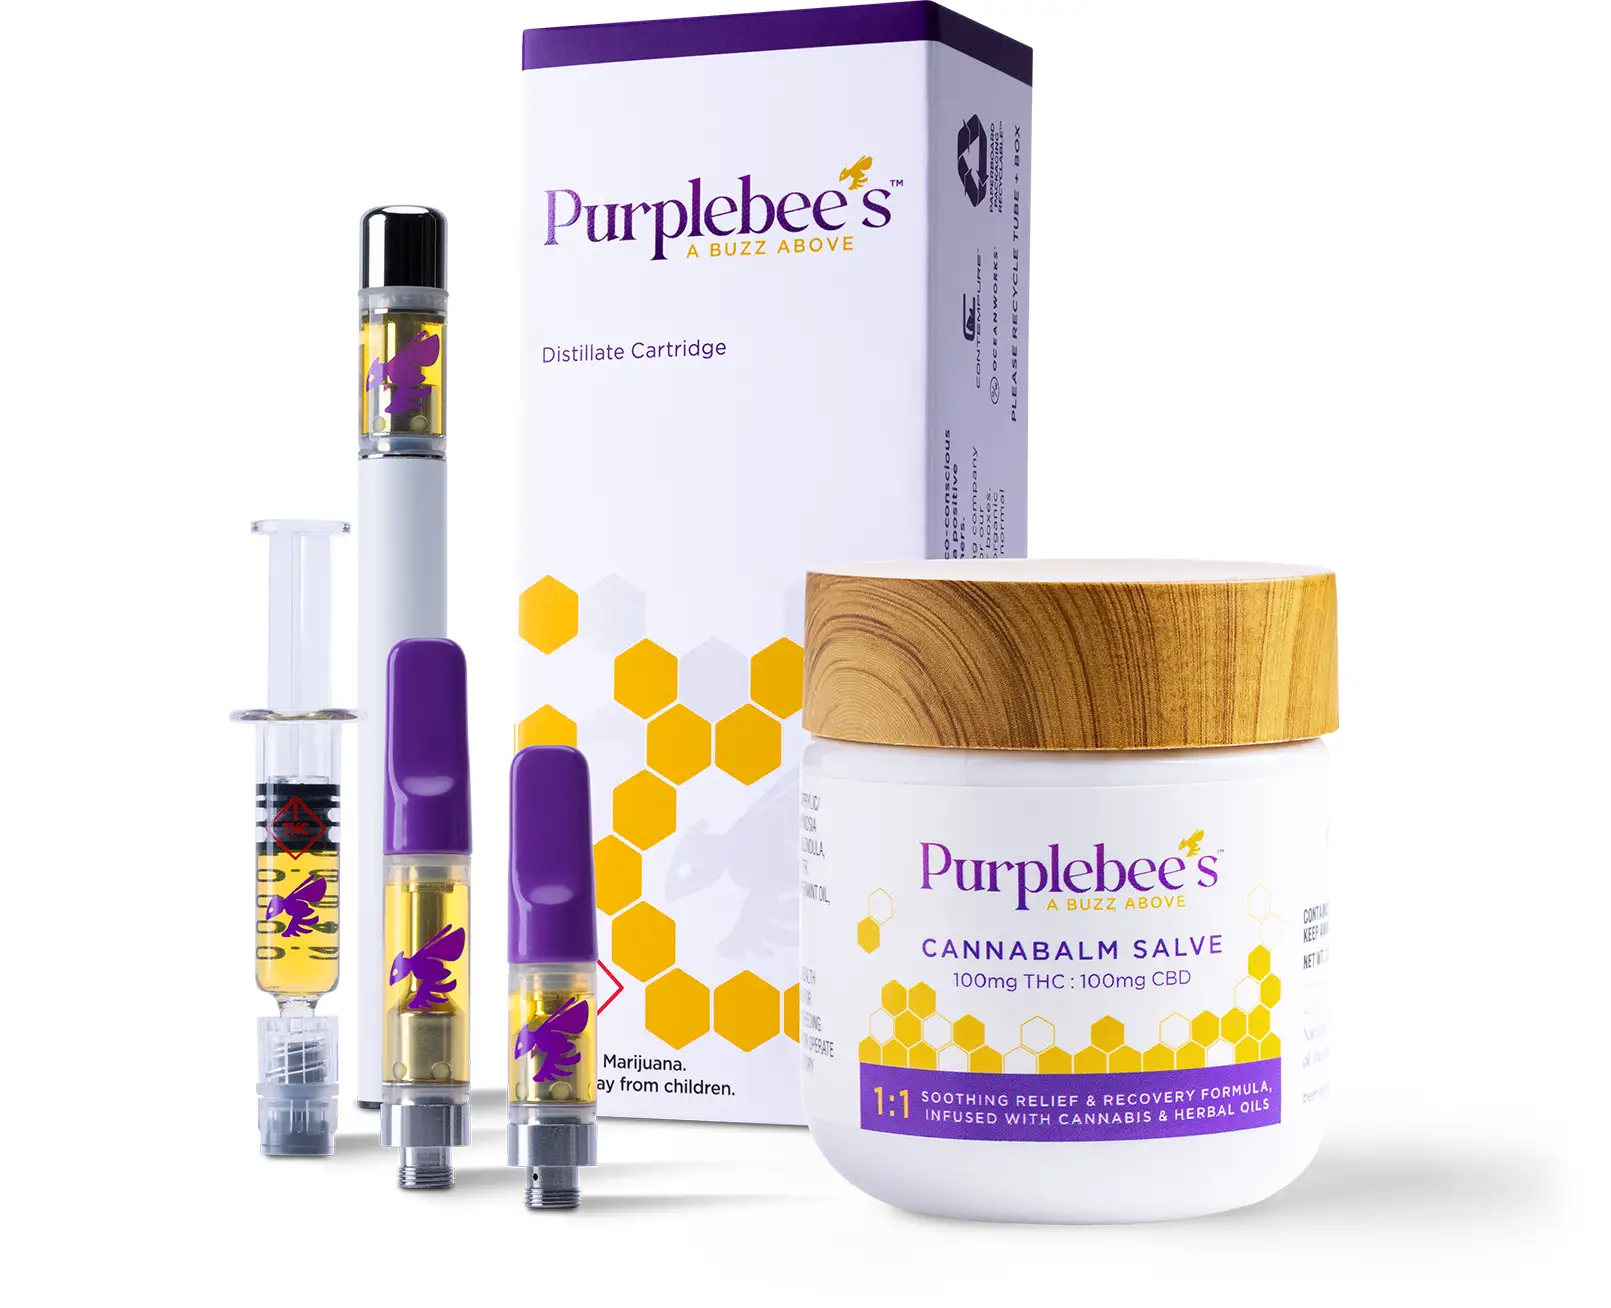 Purplebee's Products